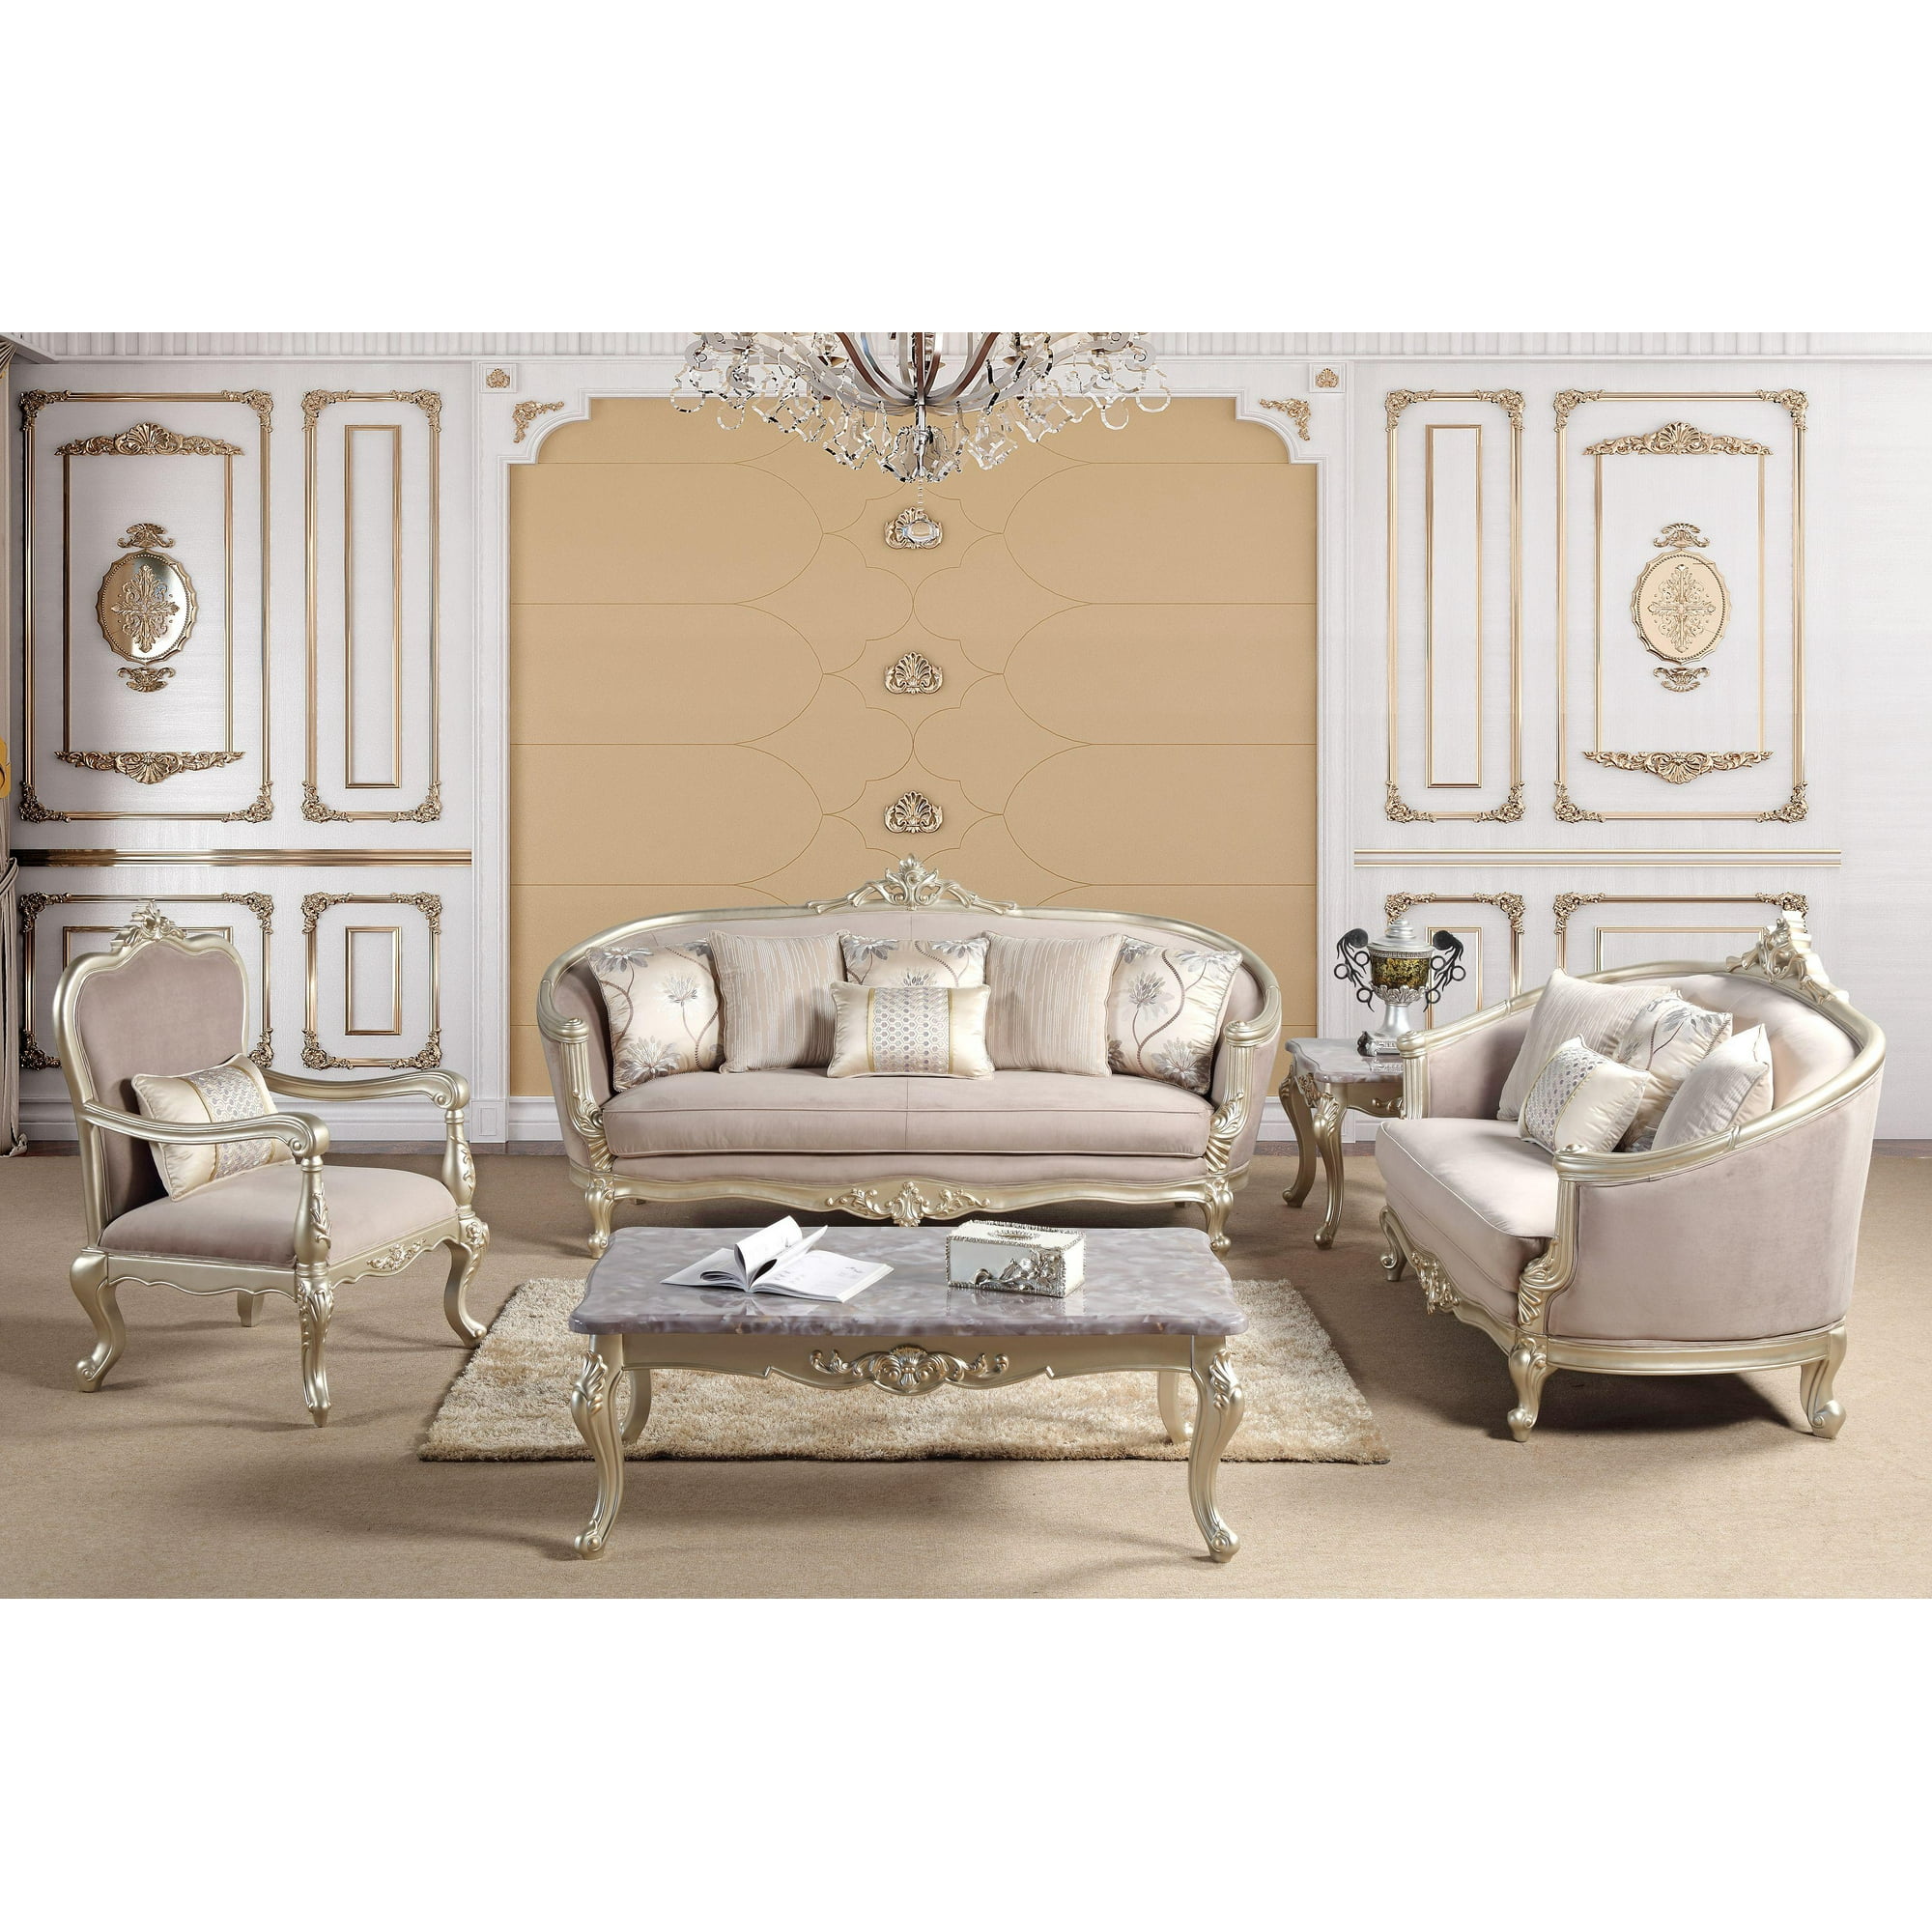 Modern Classic Luxury Sofa Set With